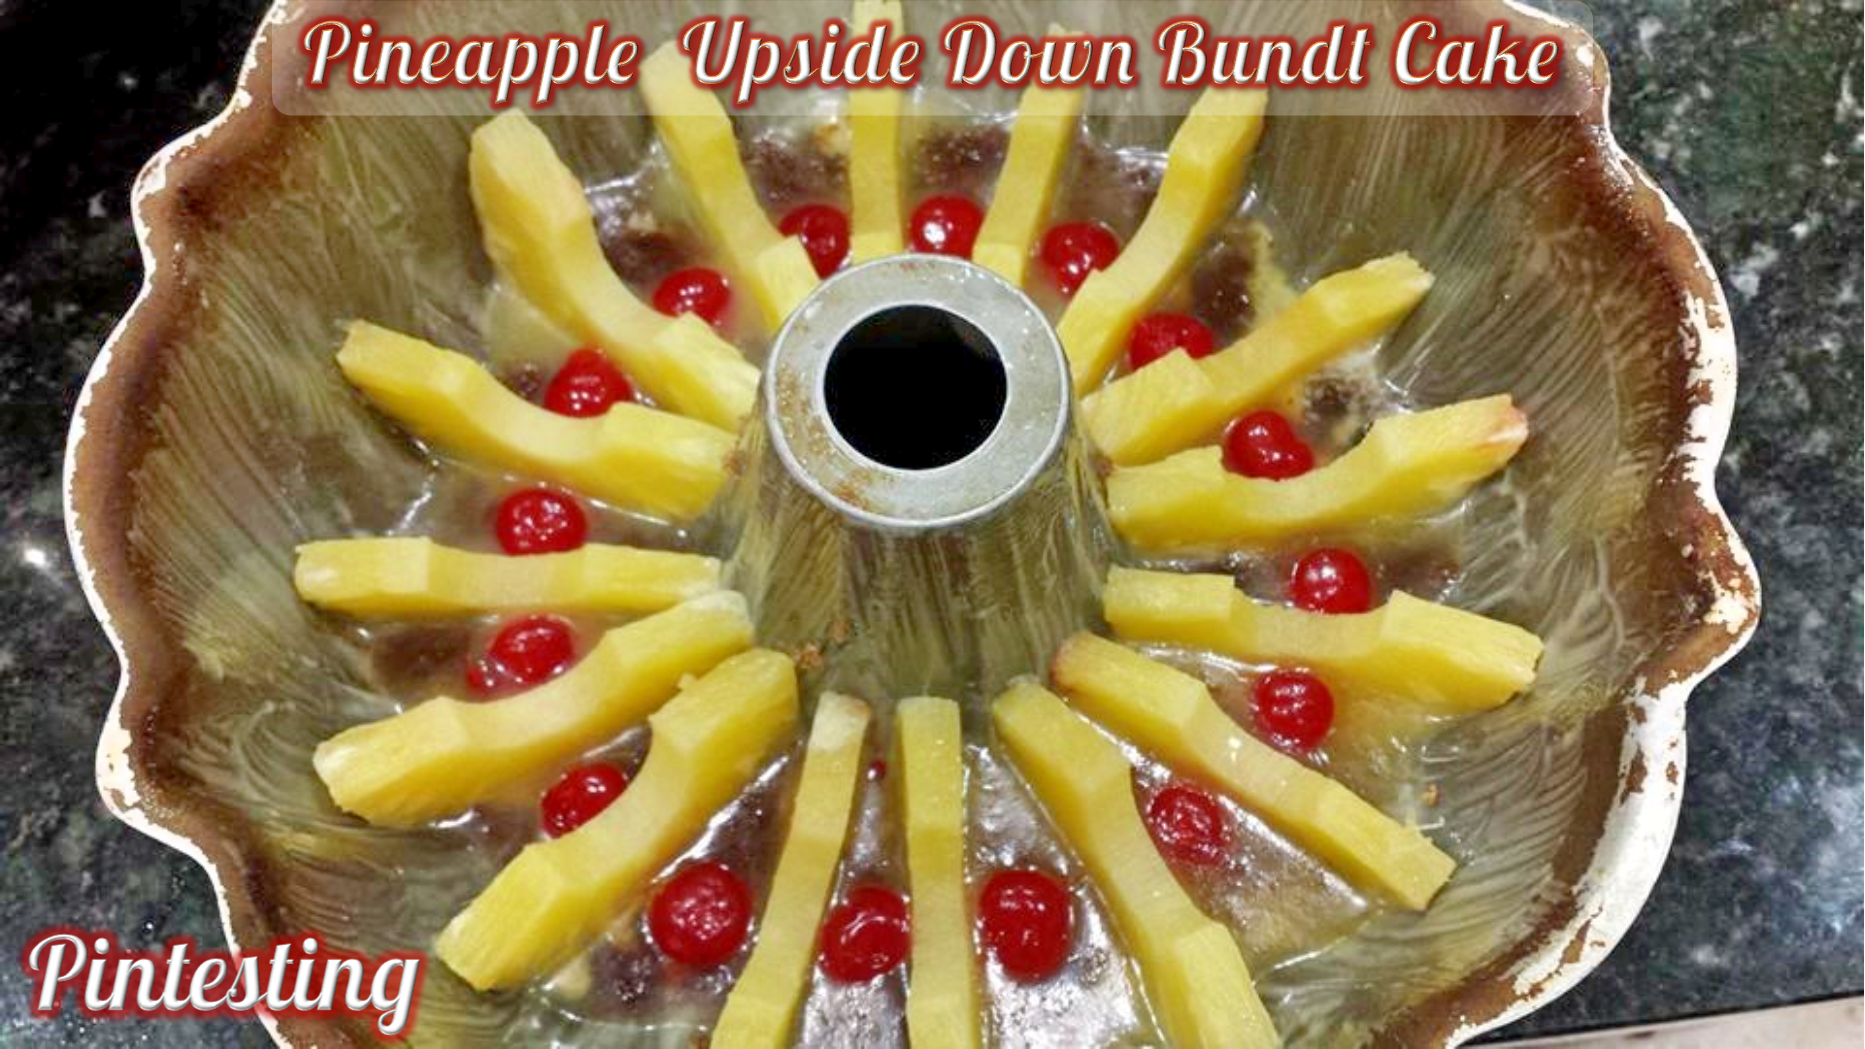 Pintesting-Pineapple-Upside-Down-Bundt-Cake-Arrange-the-Fruit1.png